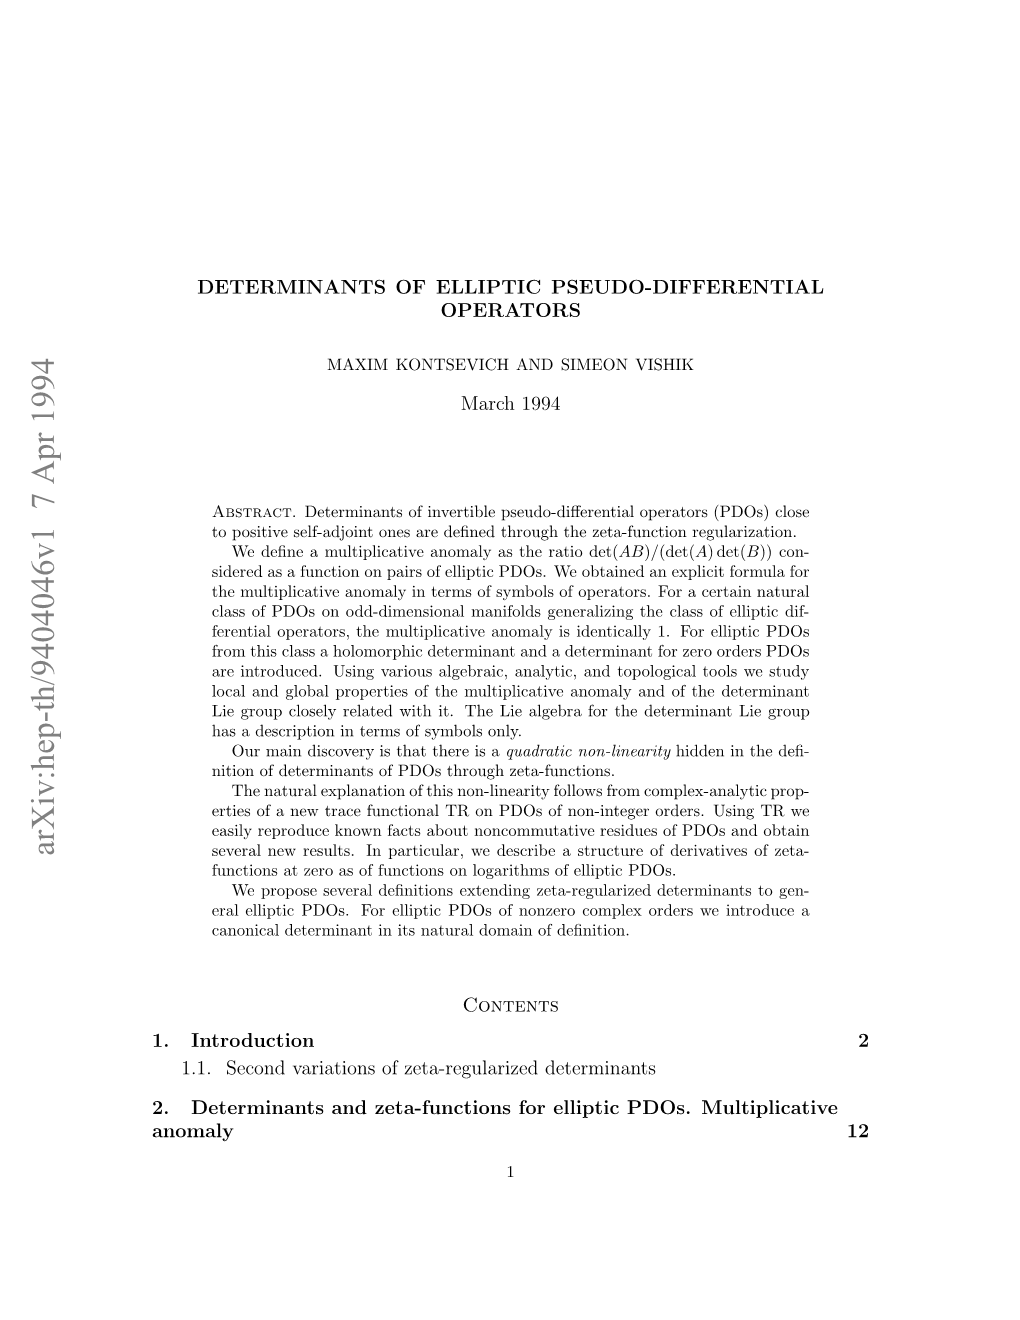 Determinants of Elliptic Pseudo-Differential Operators 3